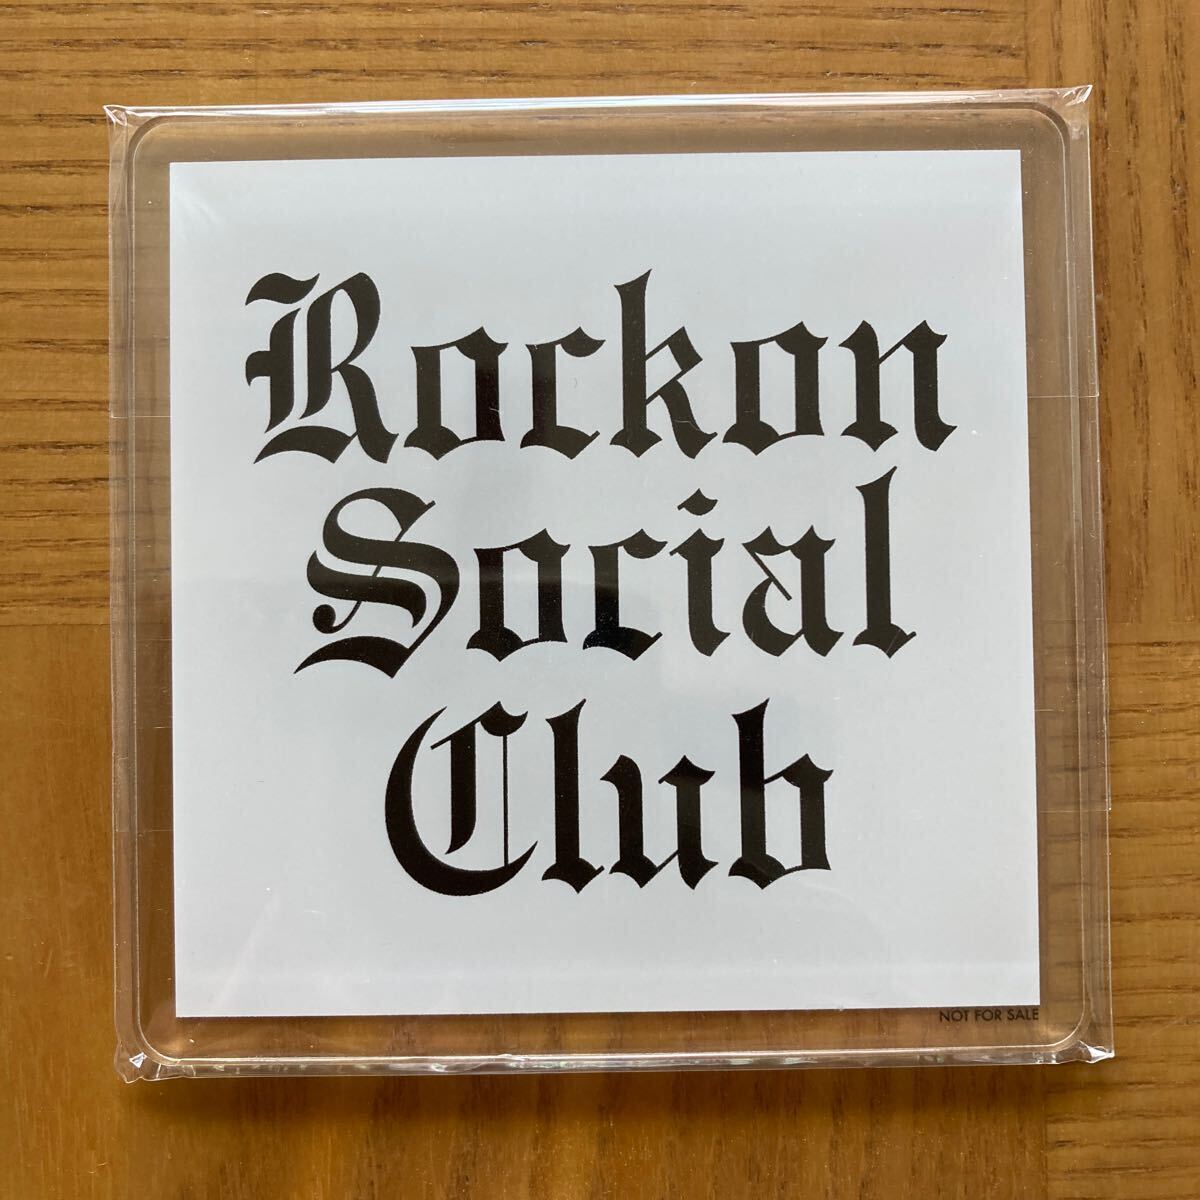 Rockon Social Club 男闘呼組 コースター ステッカー付き 送料無料♪の画像2